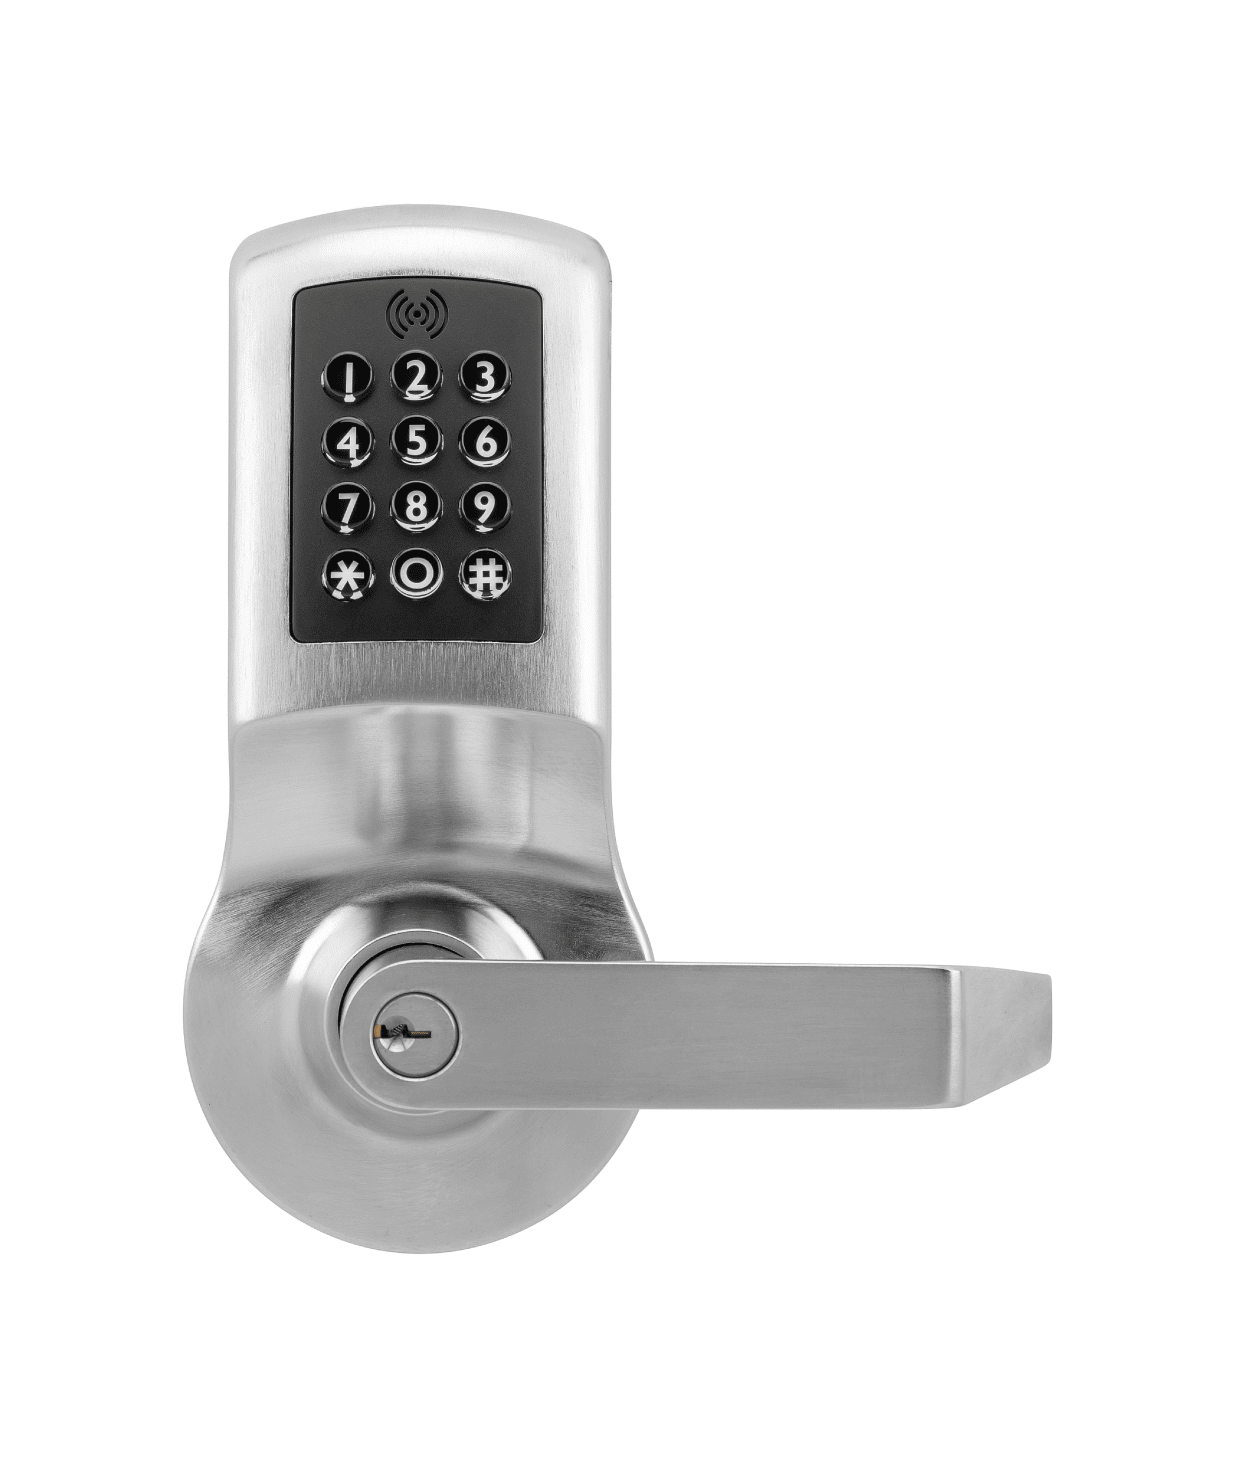 Personal Use Locks